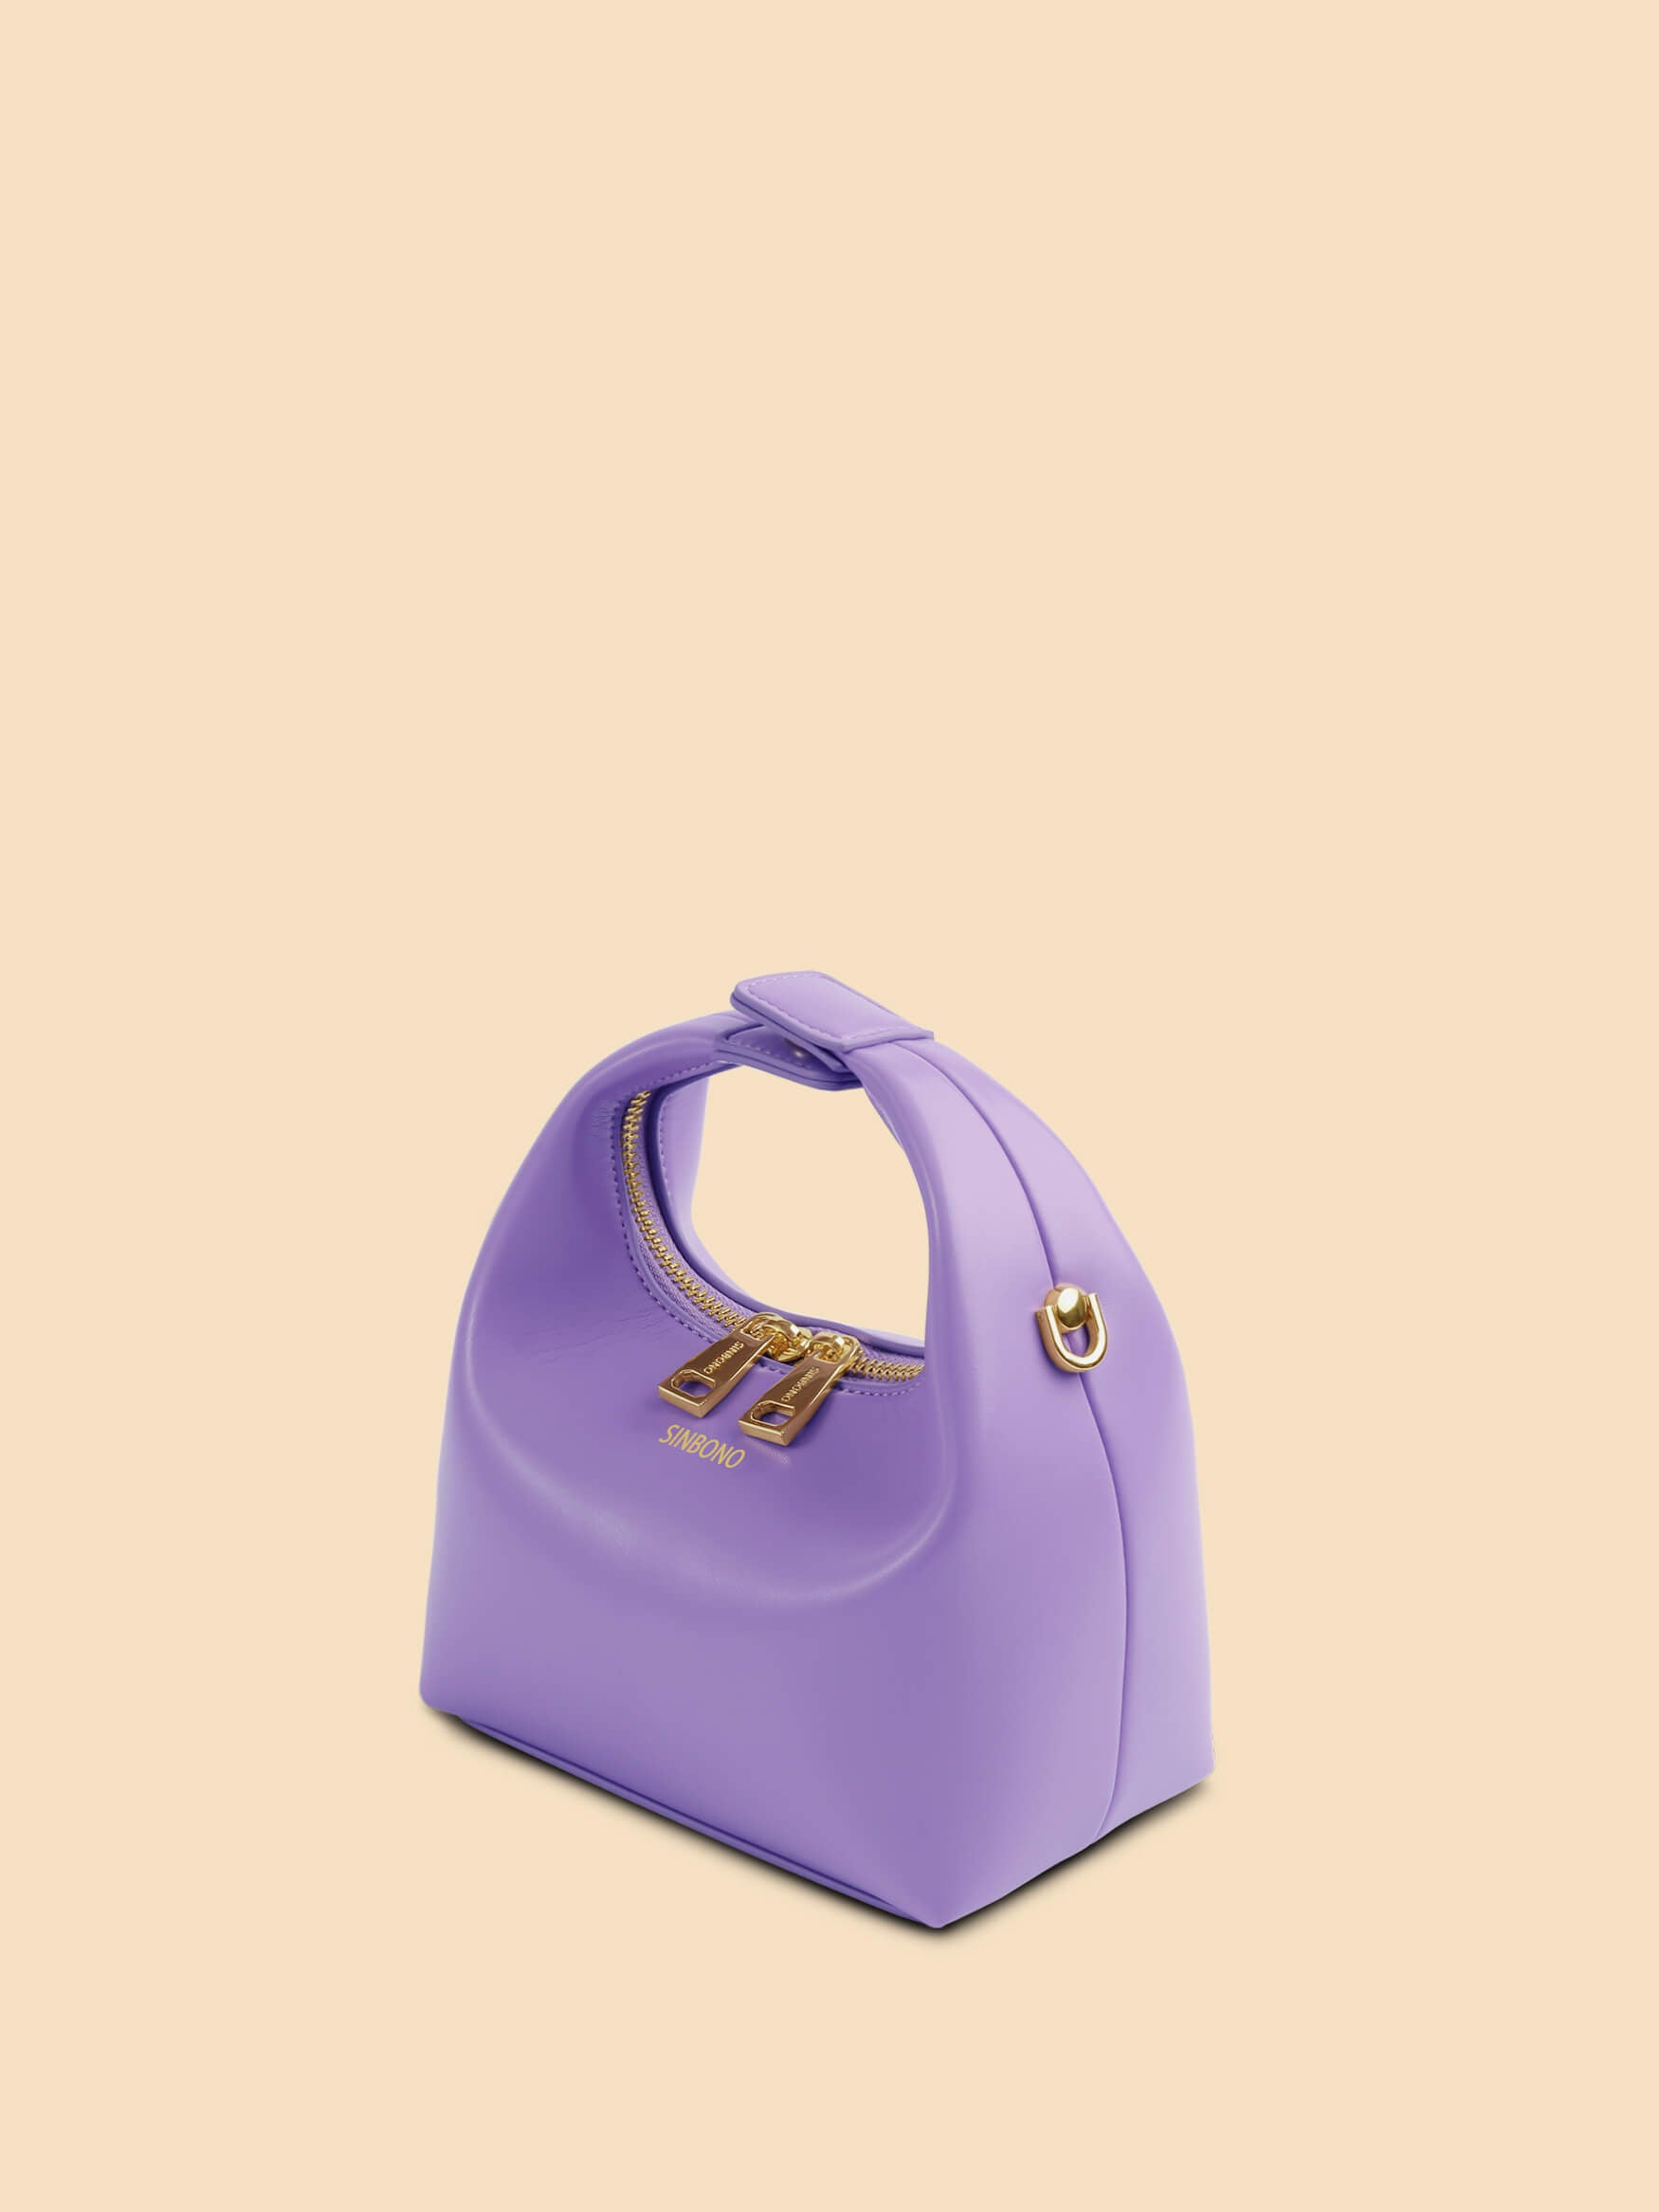 SINBONO Vienna Purple Leather Handbags -Vegan Leather Women Bag